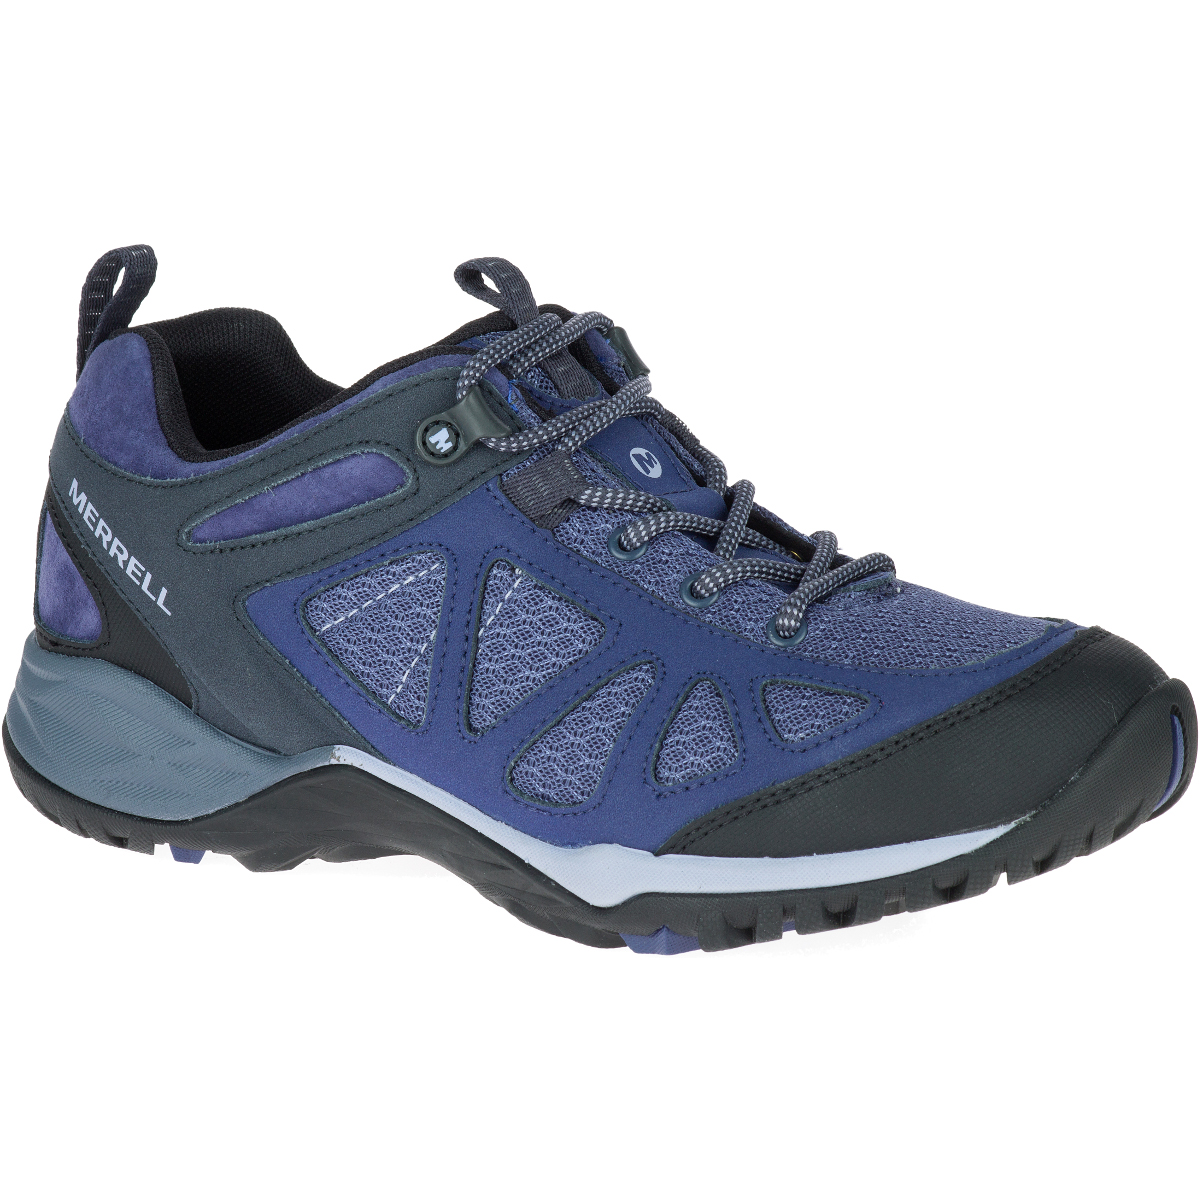 Merrell Shoes Womens 9 Sea Shore Blue Grey Hiking Athletic Breathable  J57258